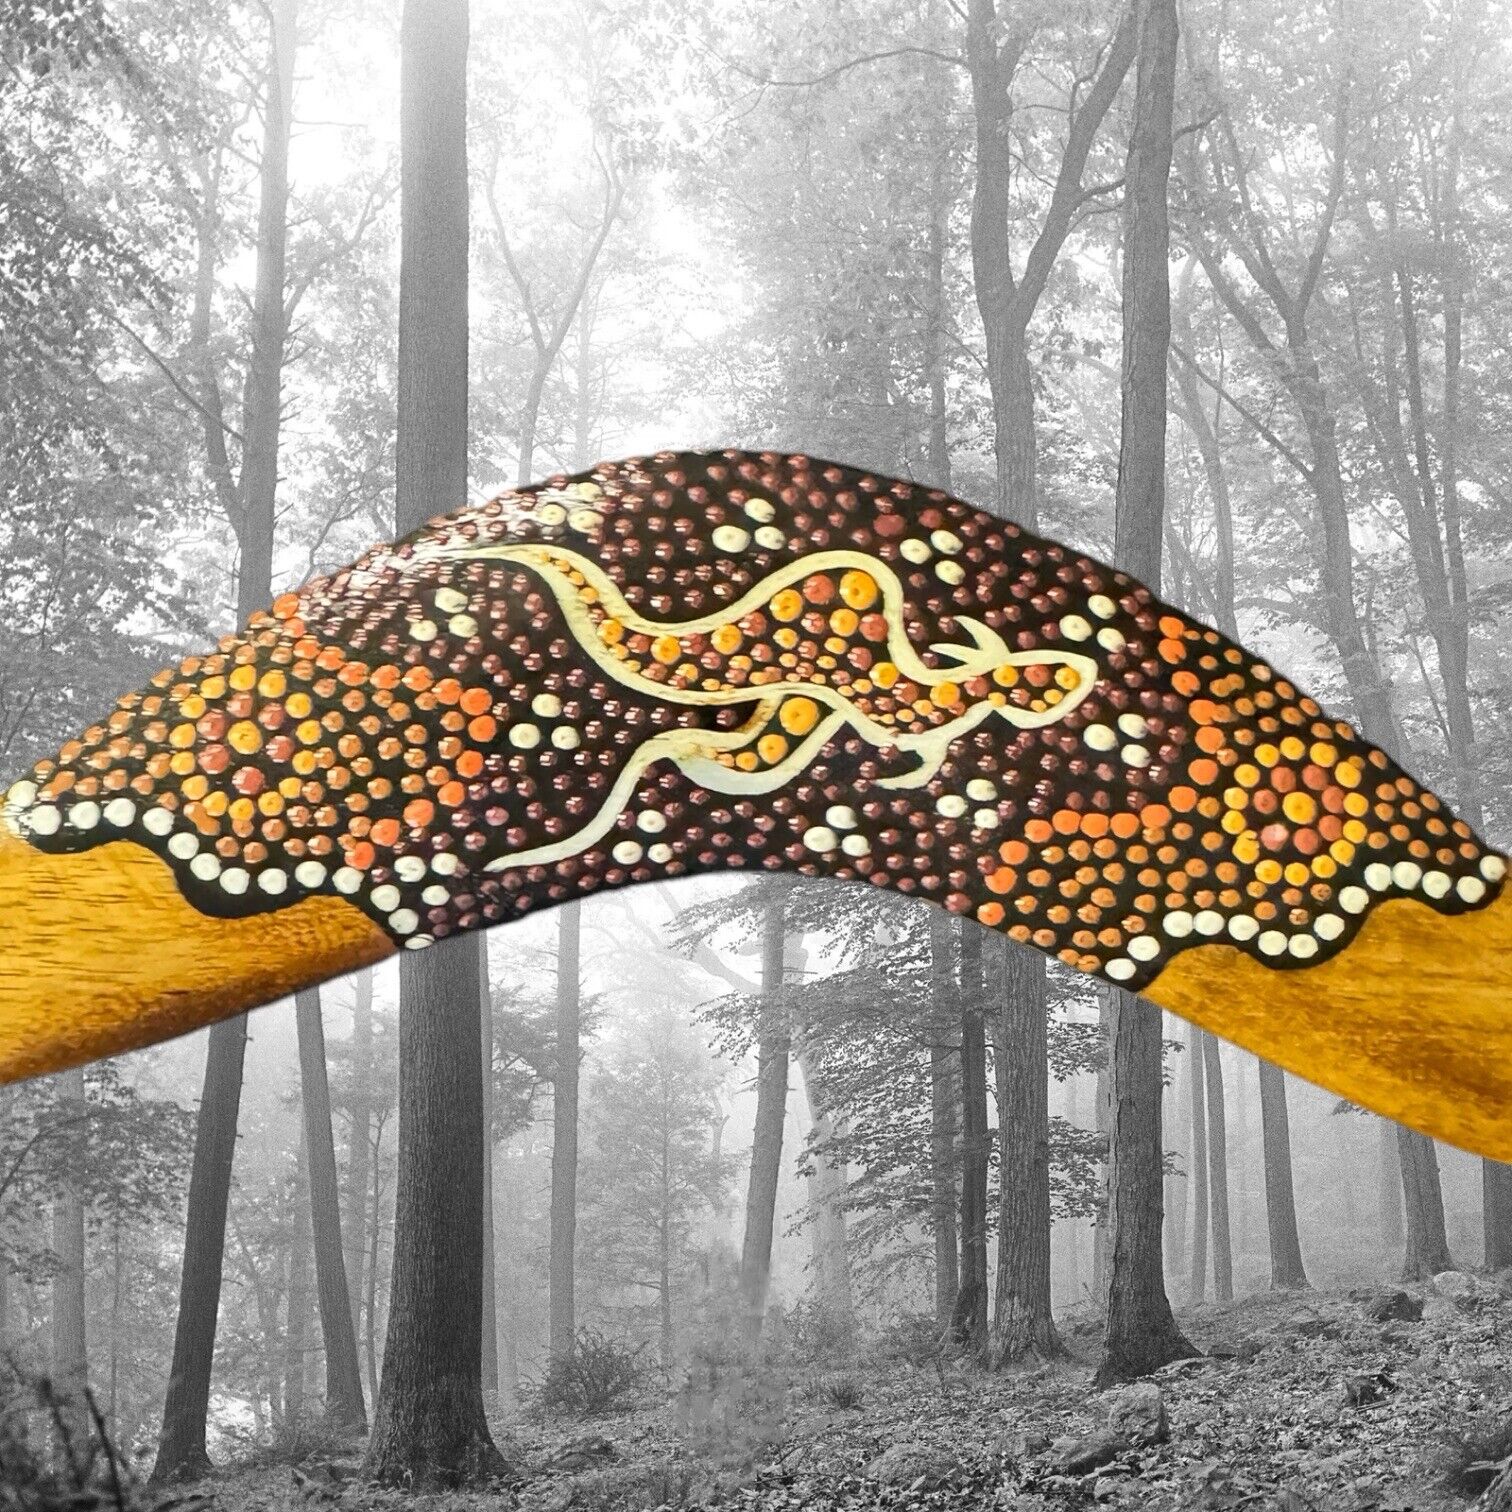 Dream Time Down Under 8” Boomerang From Australia Aboriginal Art Wood Authentic